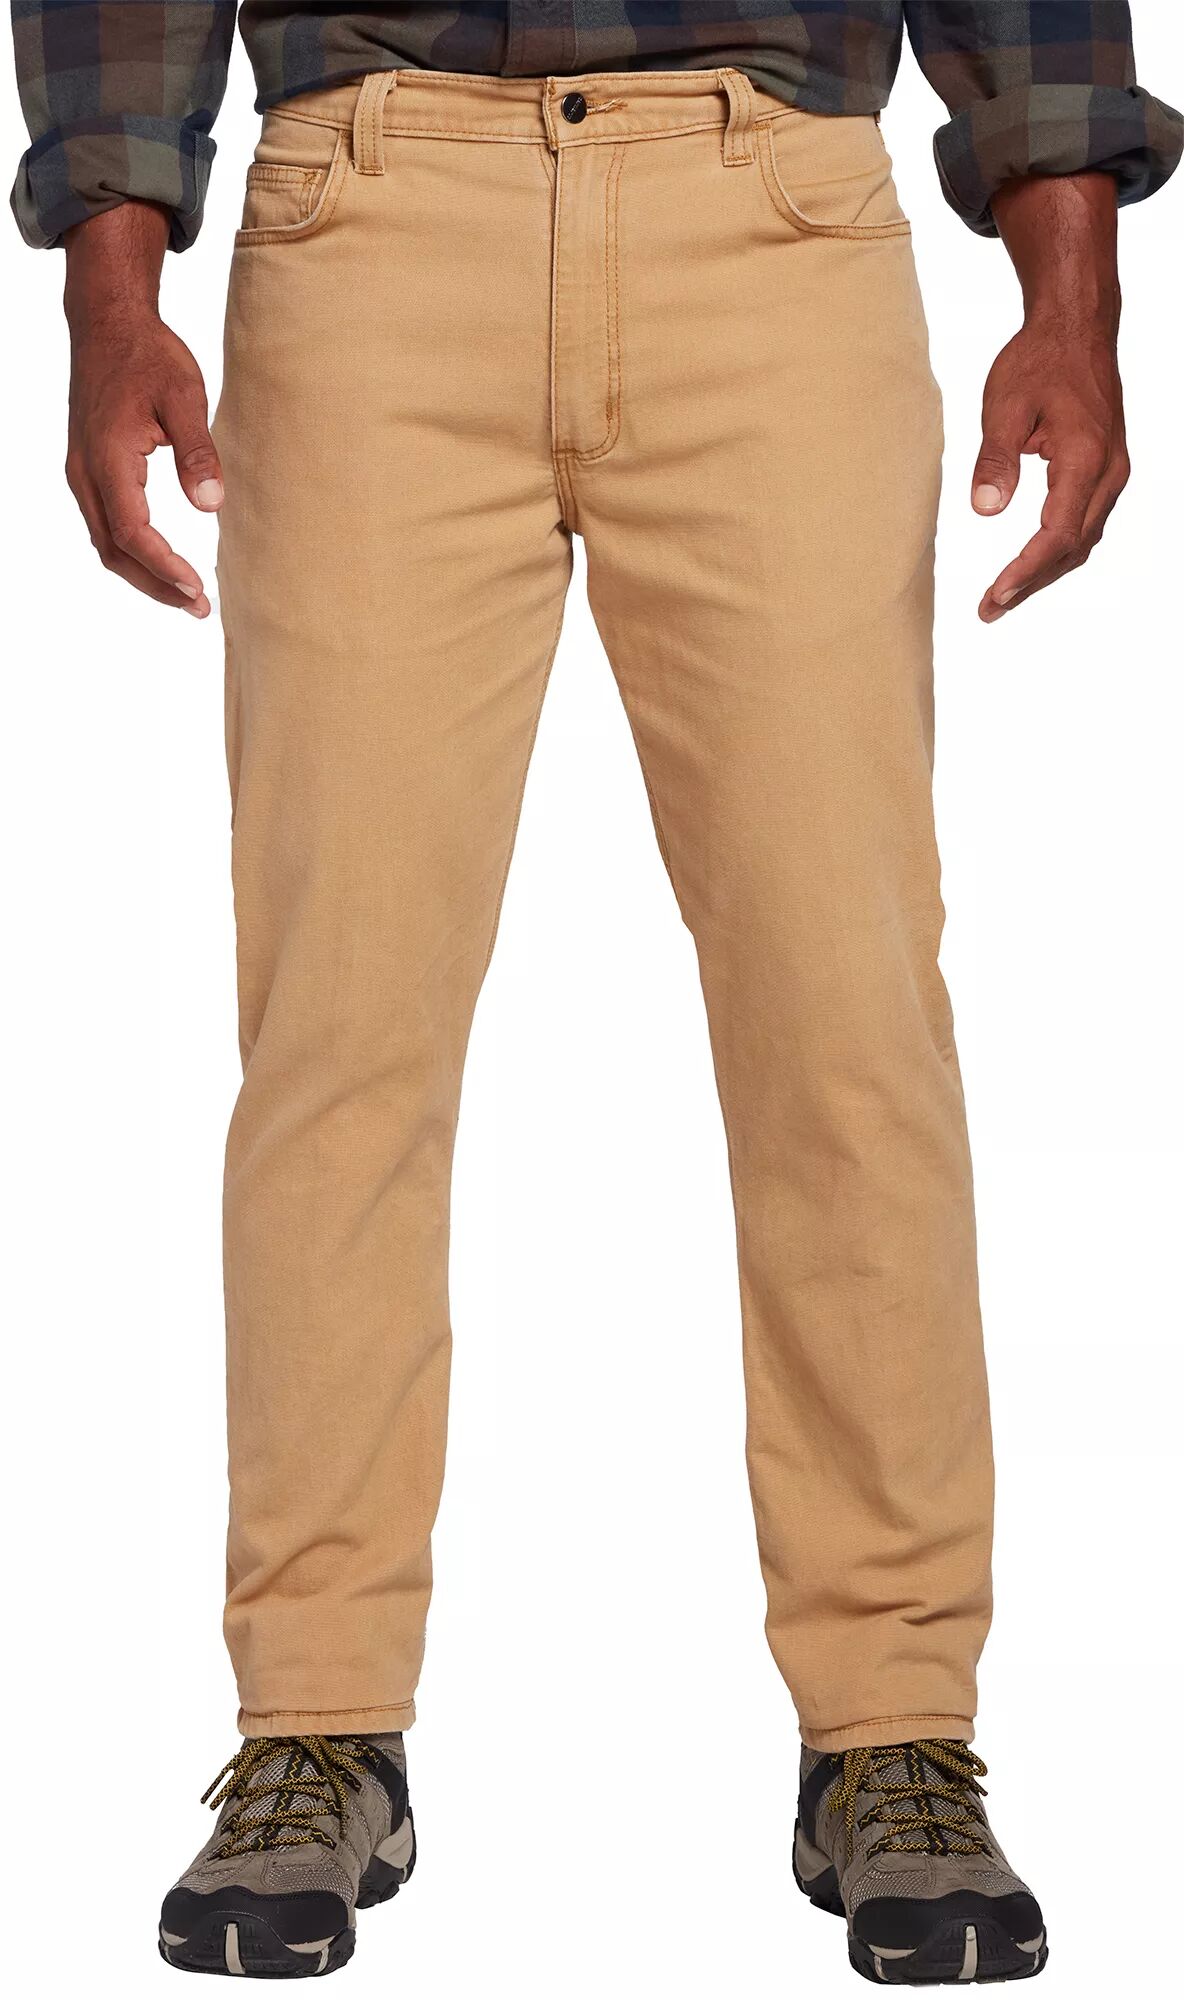 Carhartt Men's Rugged Flex Rigby 5-Pocket Pants, Size 38, Tan